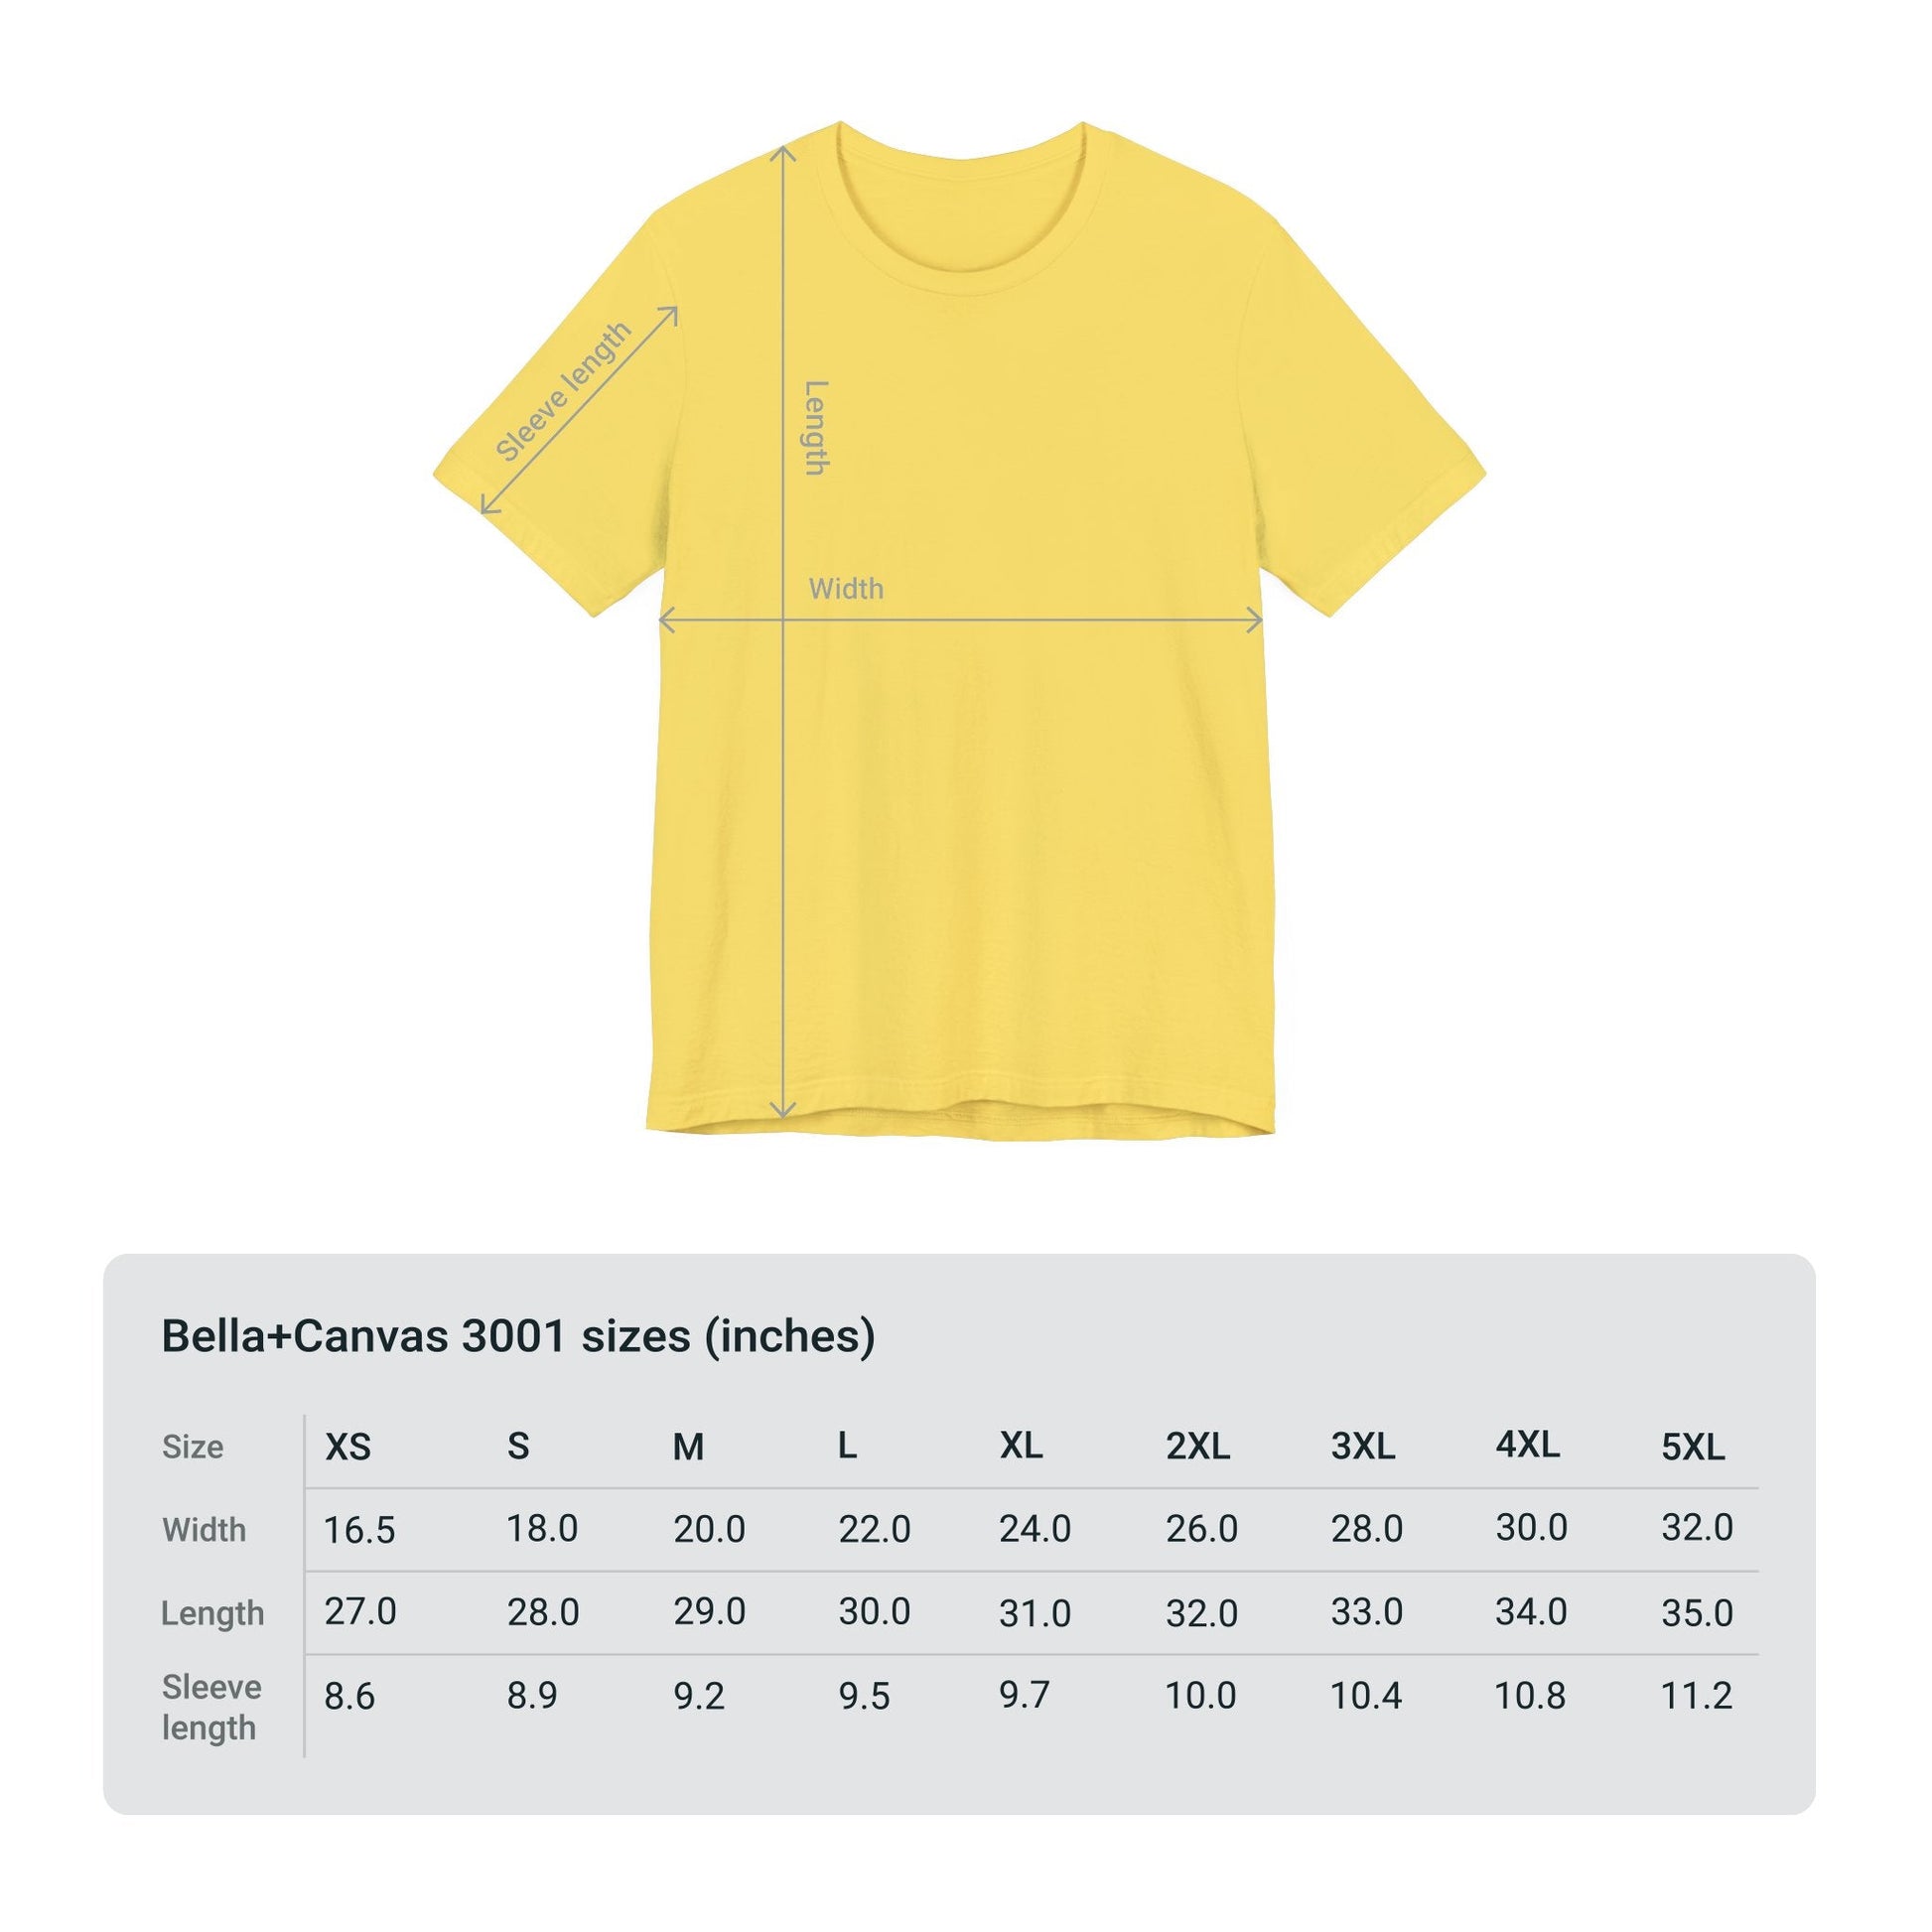 Raven On Beach Ball Short Sleeve Tee ShirtT - ShirtVTZdesignsSolid Athletic GreyXSCottonCrew neckcrow